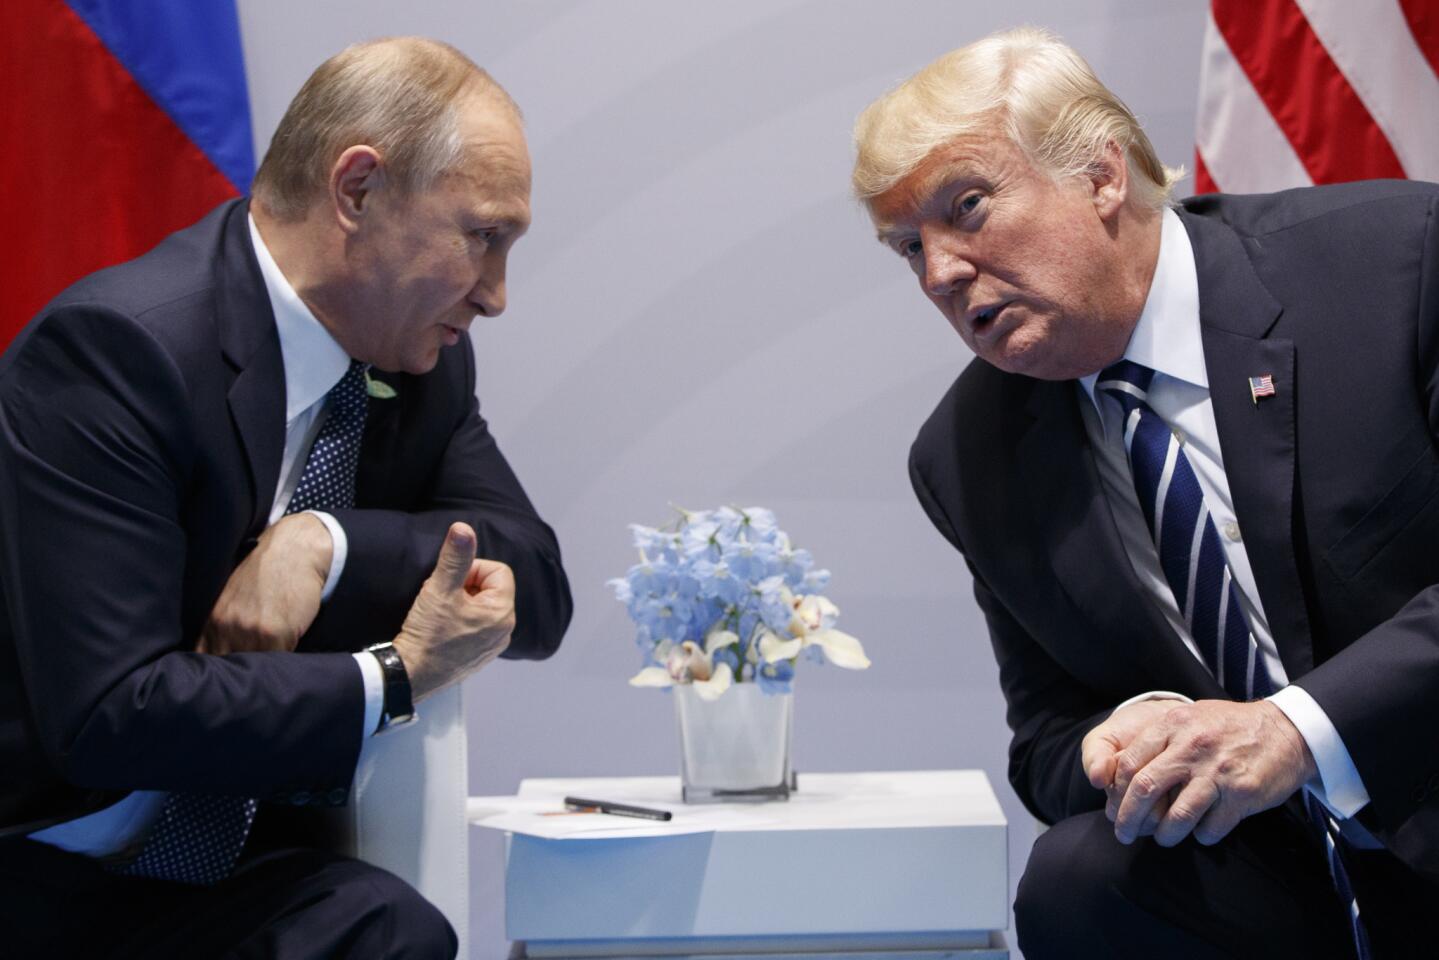 President Donald Trump meets with Russian President Vladimir Putin at the G20 Summit in Hamburg on July 7, 2017.